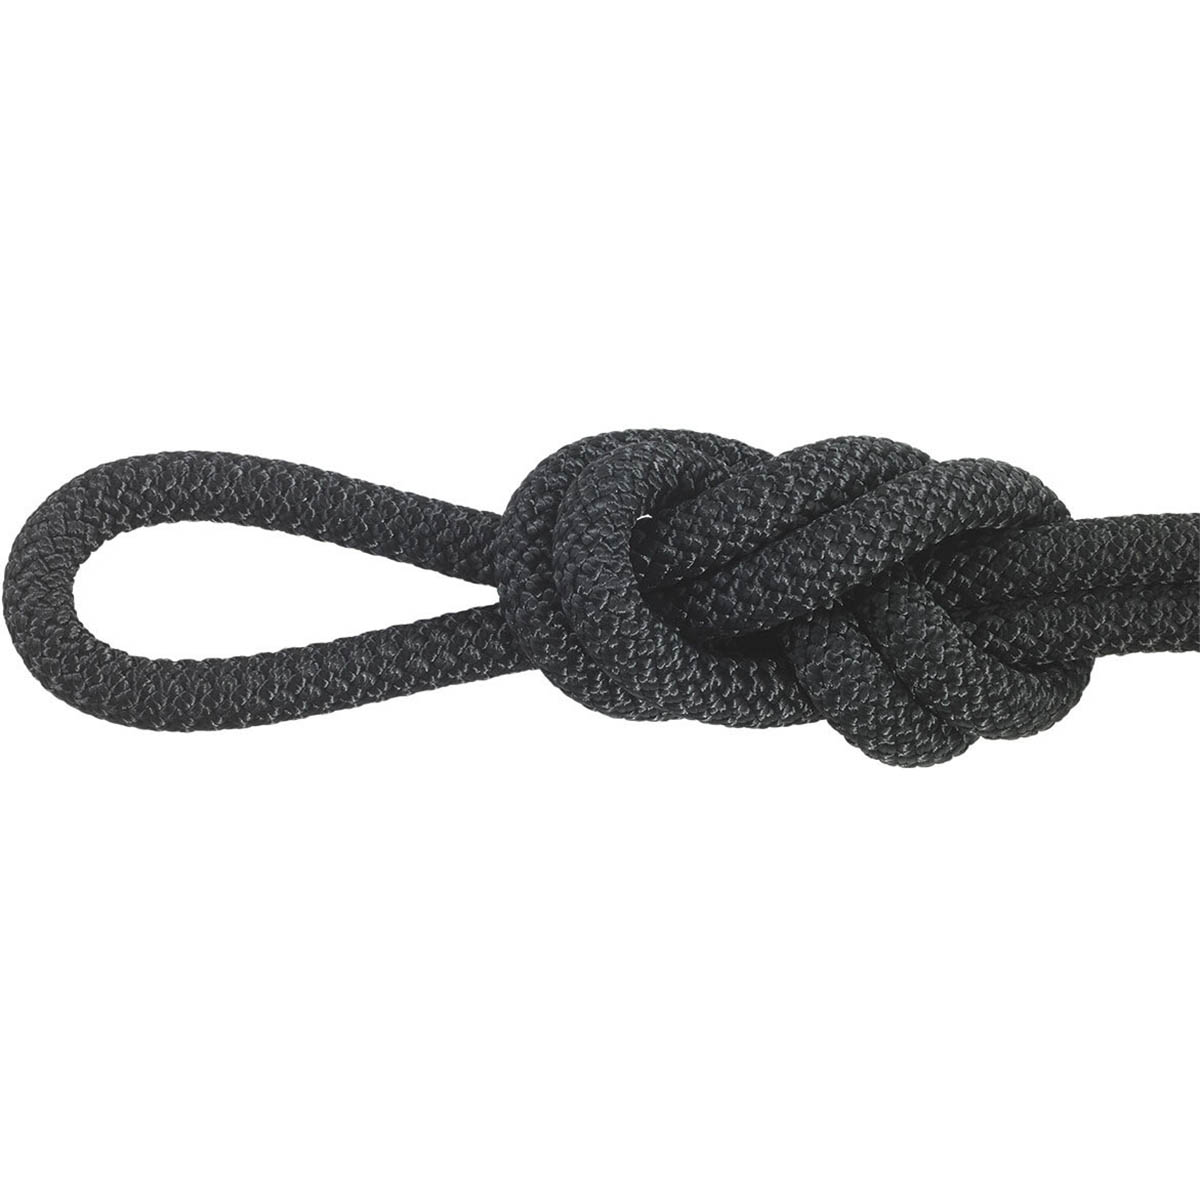 Comparison Review: Sub 9mm Climbing Ropes - Black Sheep Adventure Sports